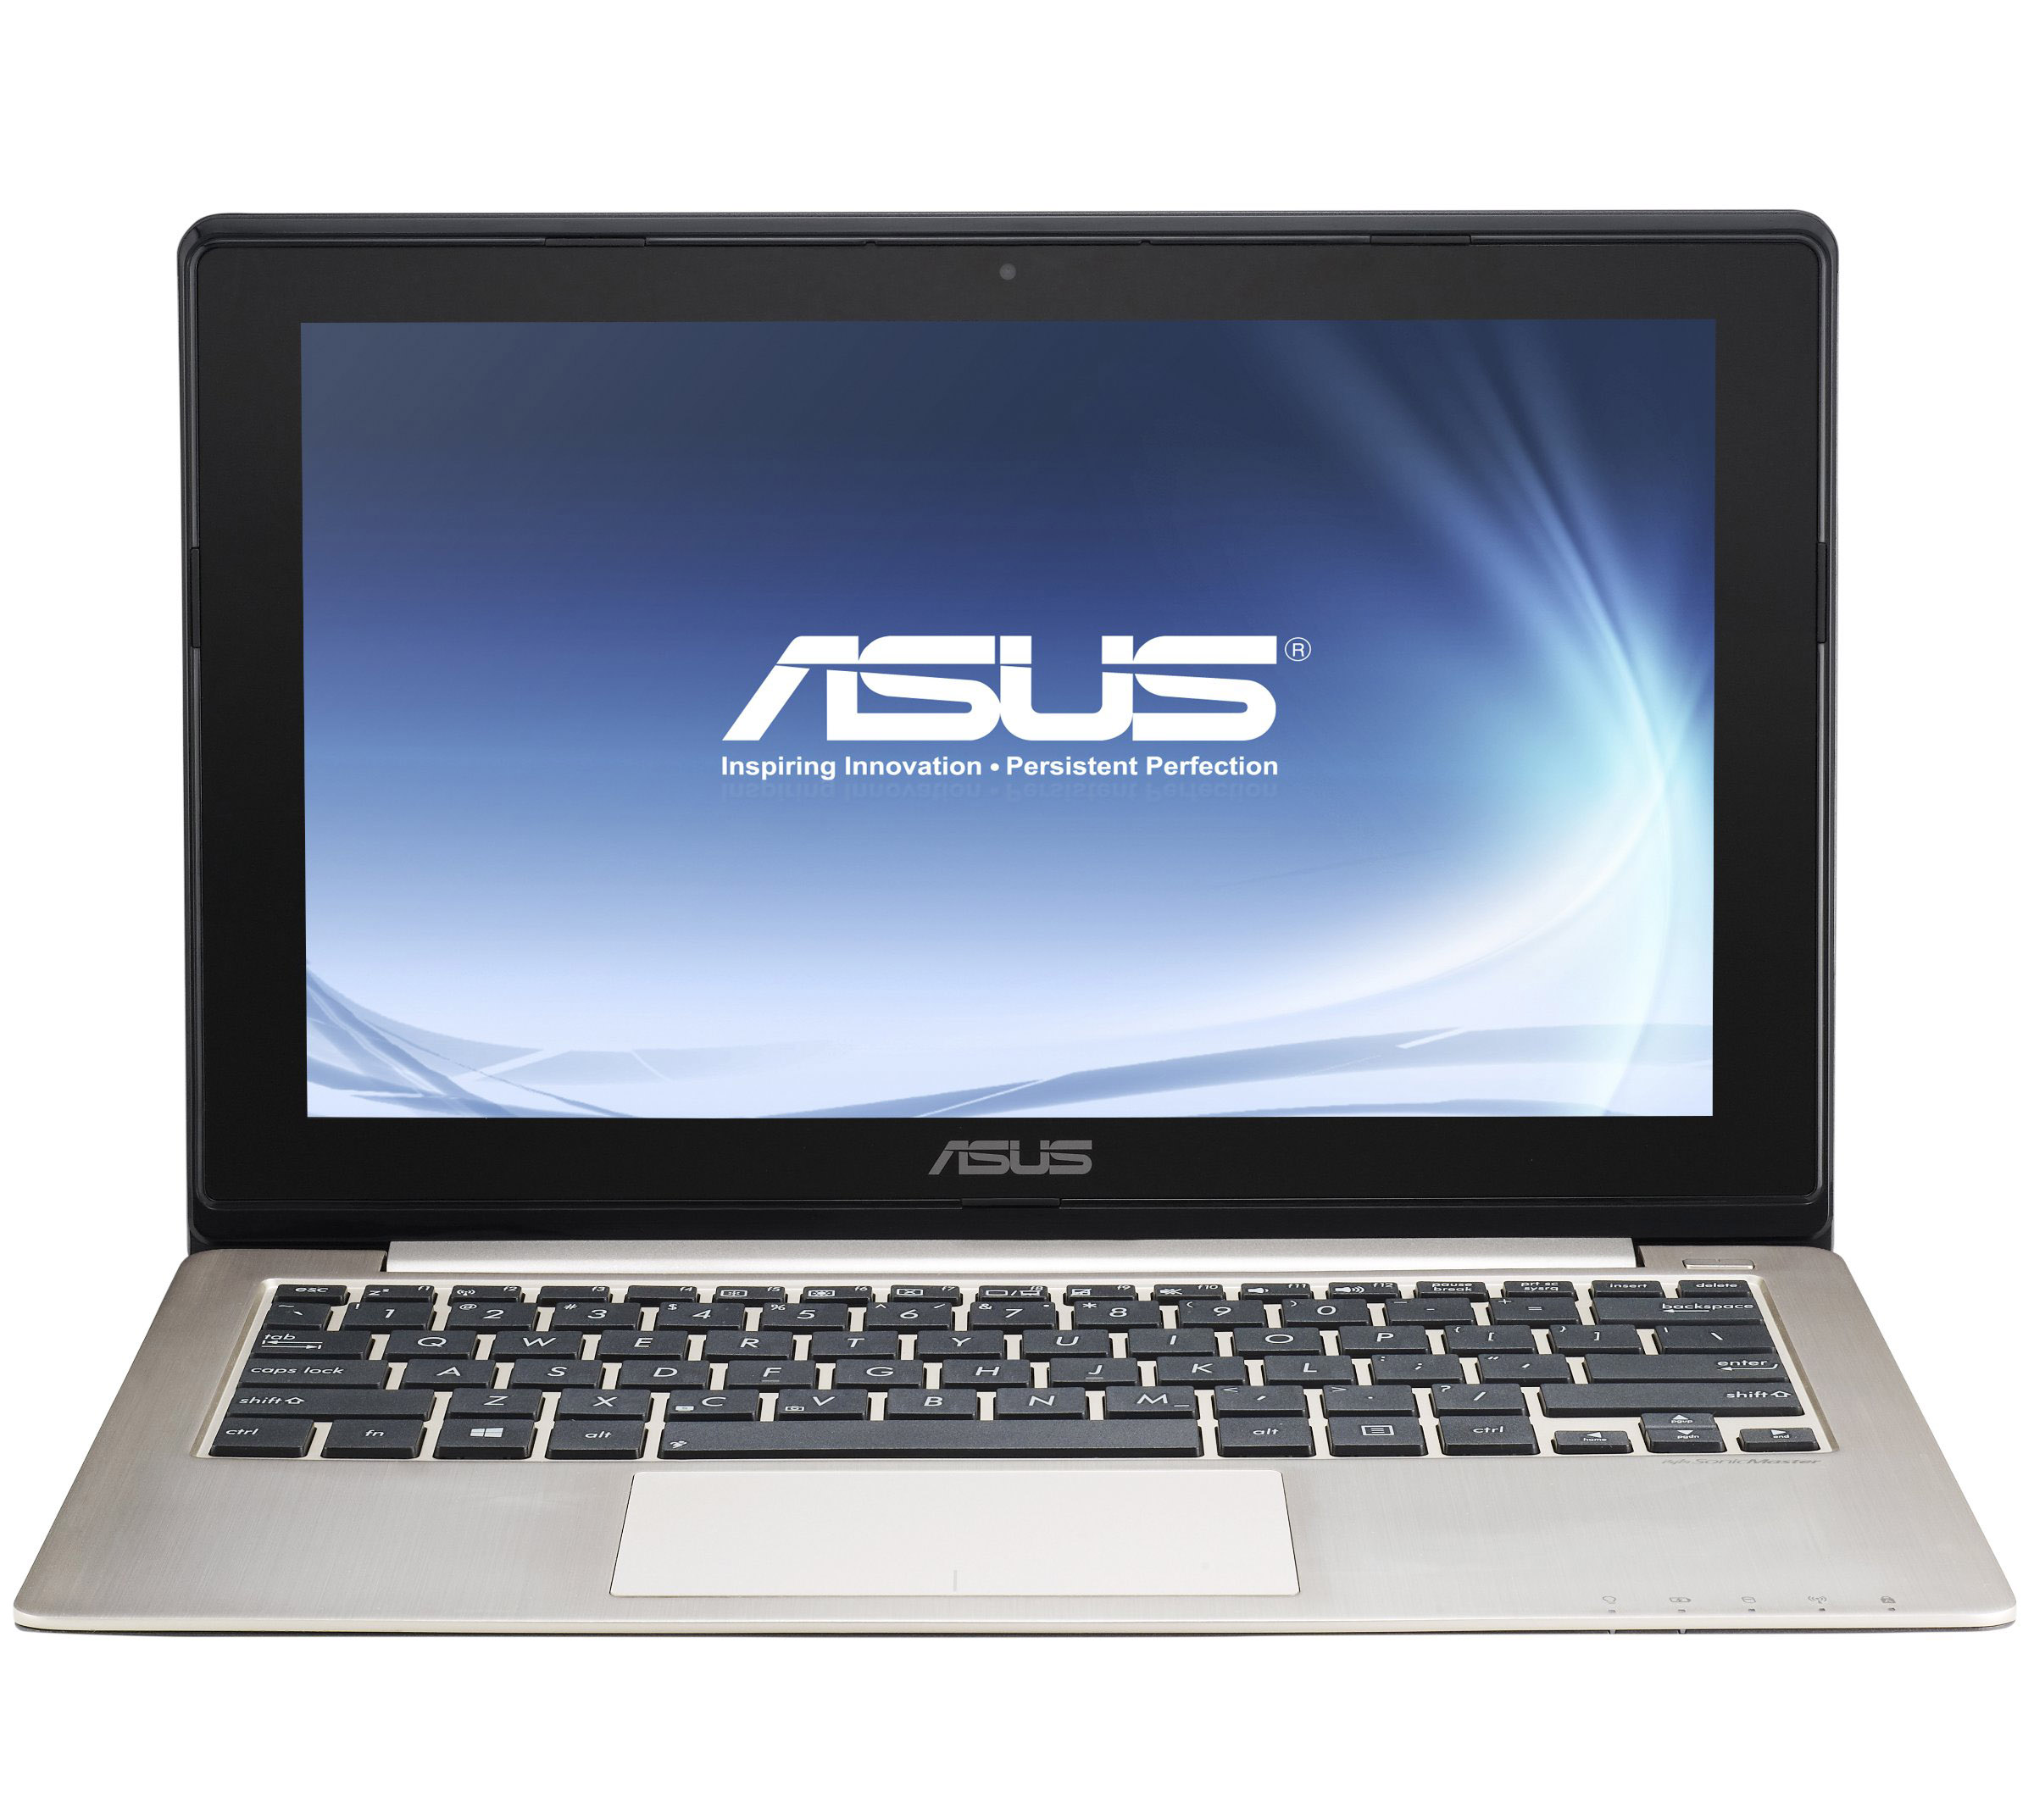 Купить ноутбук на озоне недорого. ASUS x555ln. Ноутбук ASUS n550jv. ASUS x540ma. Ноутбук ASUS ZENBOOK ux32a.